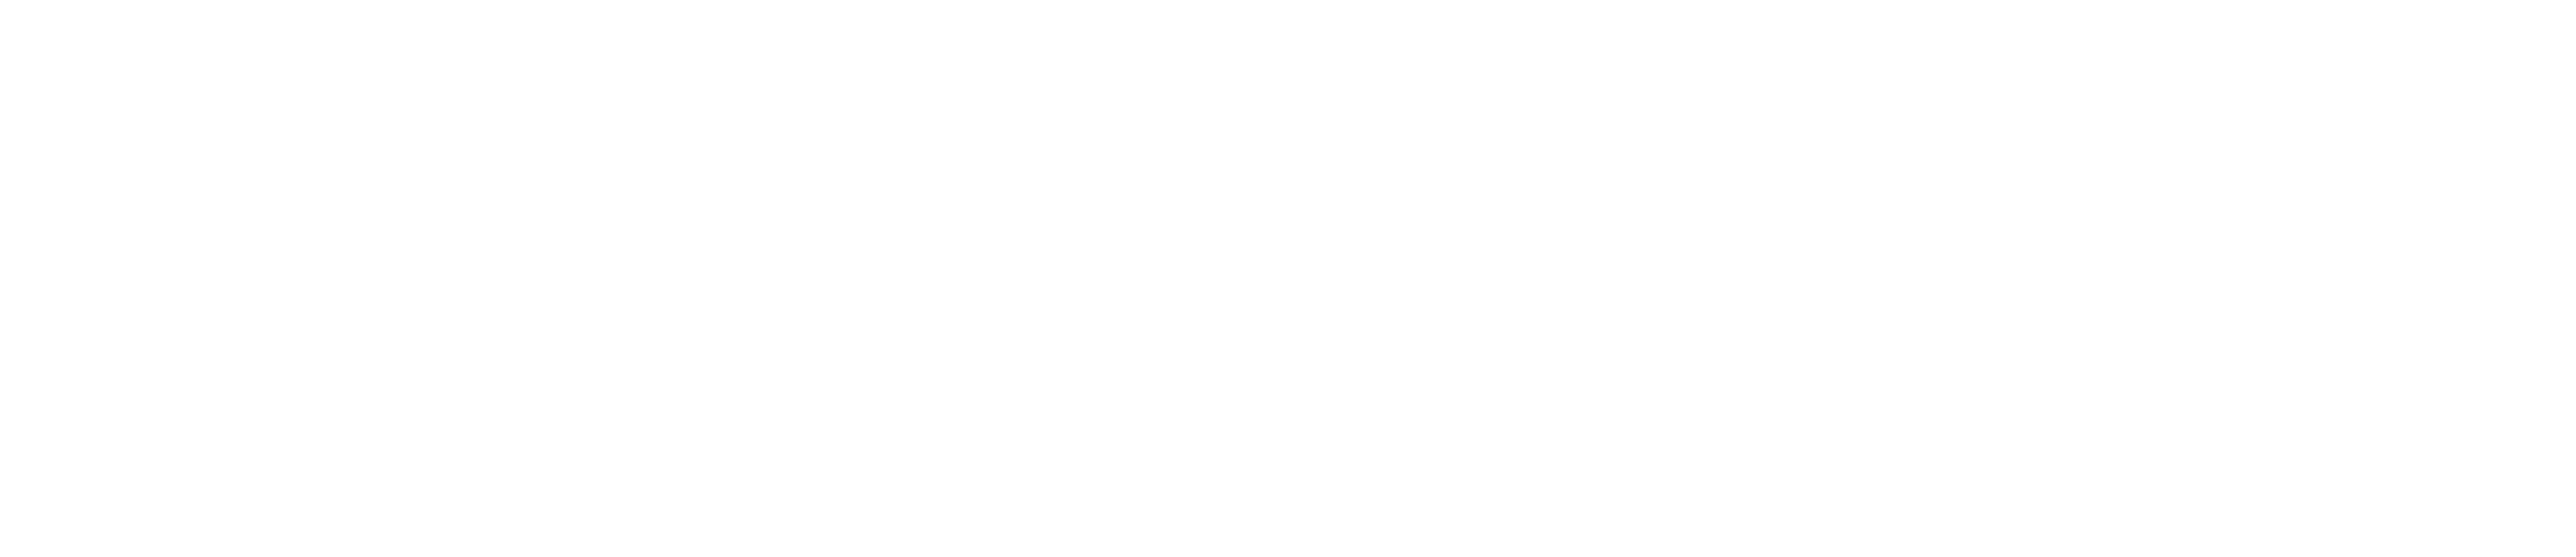 International Resource Center for Pandemic and Disaster Nursing